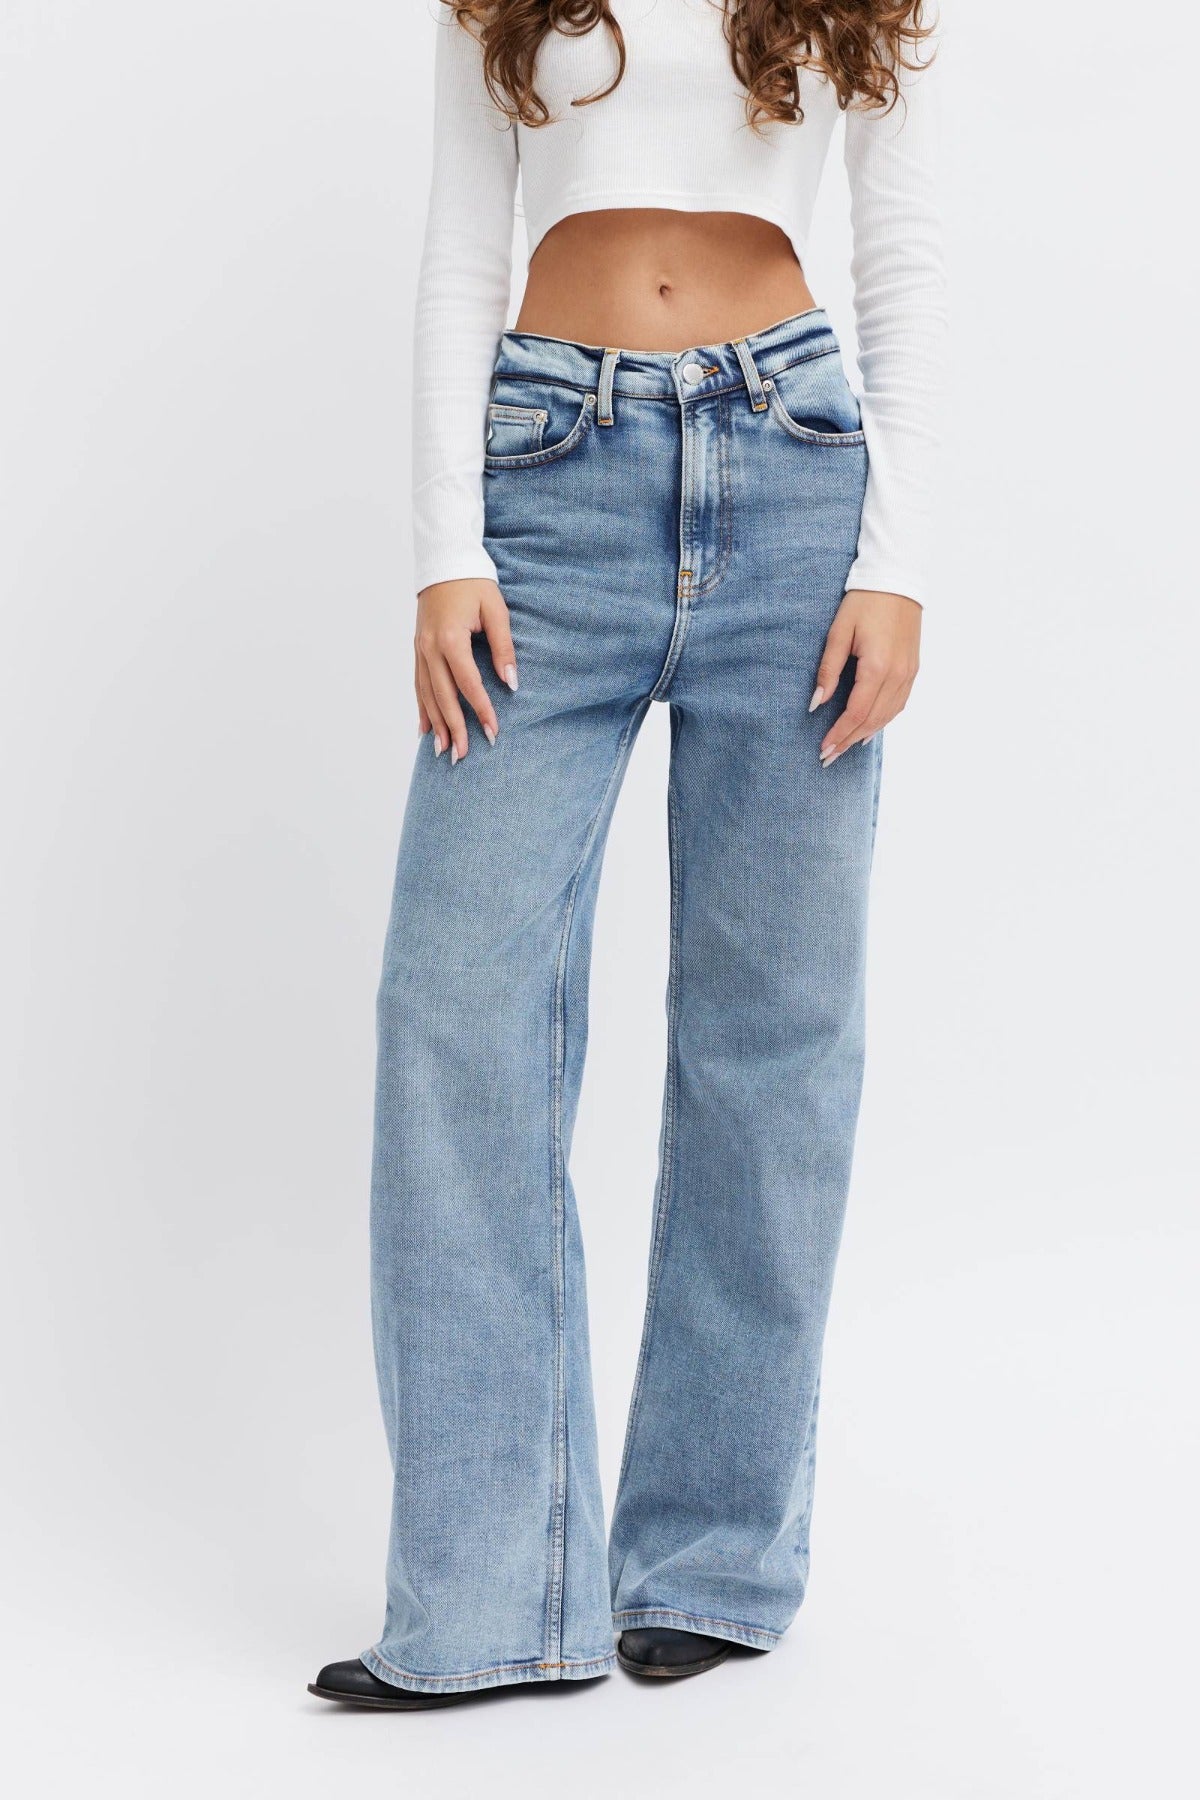 Eco-Friendly Jeans - Lease your denim